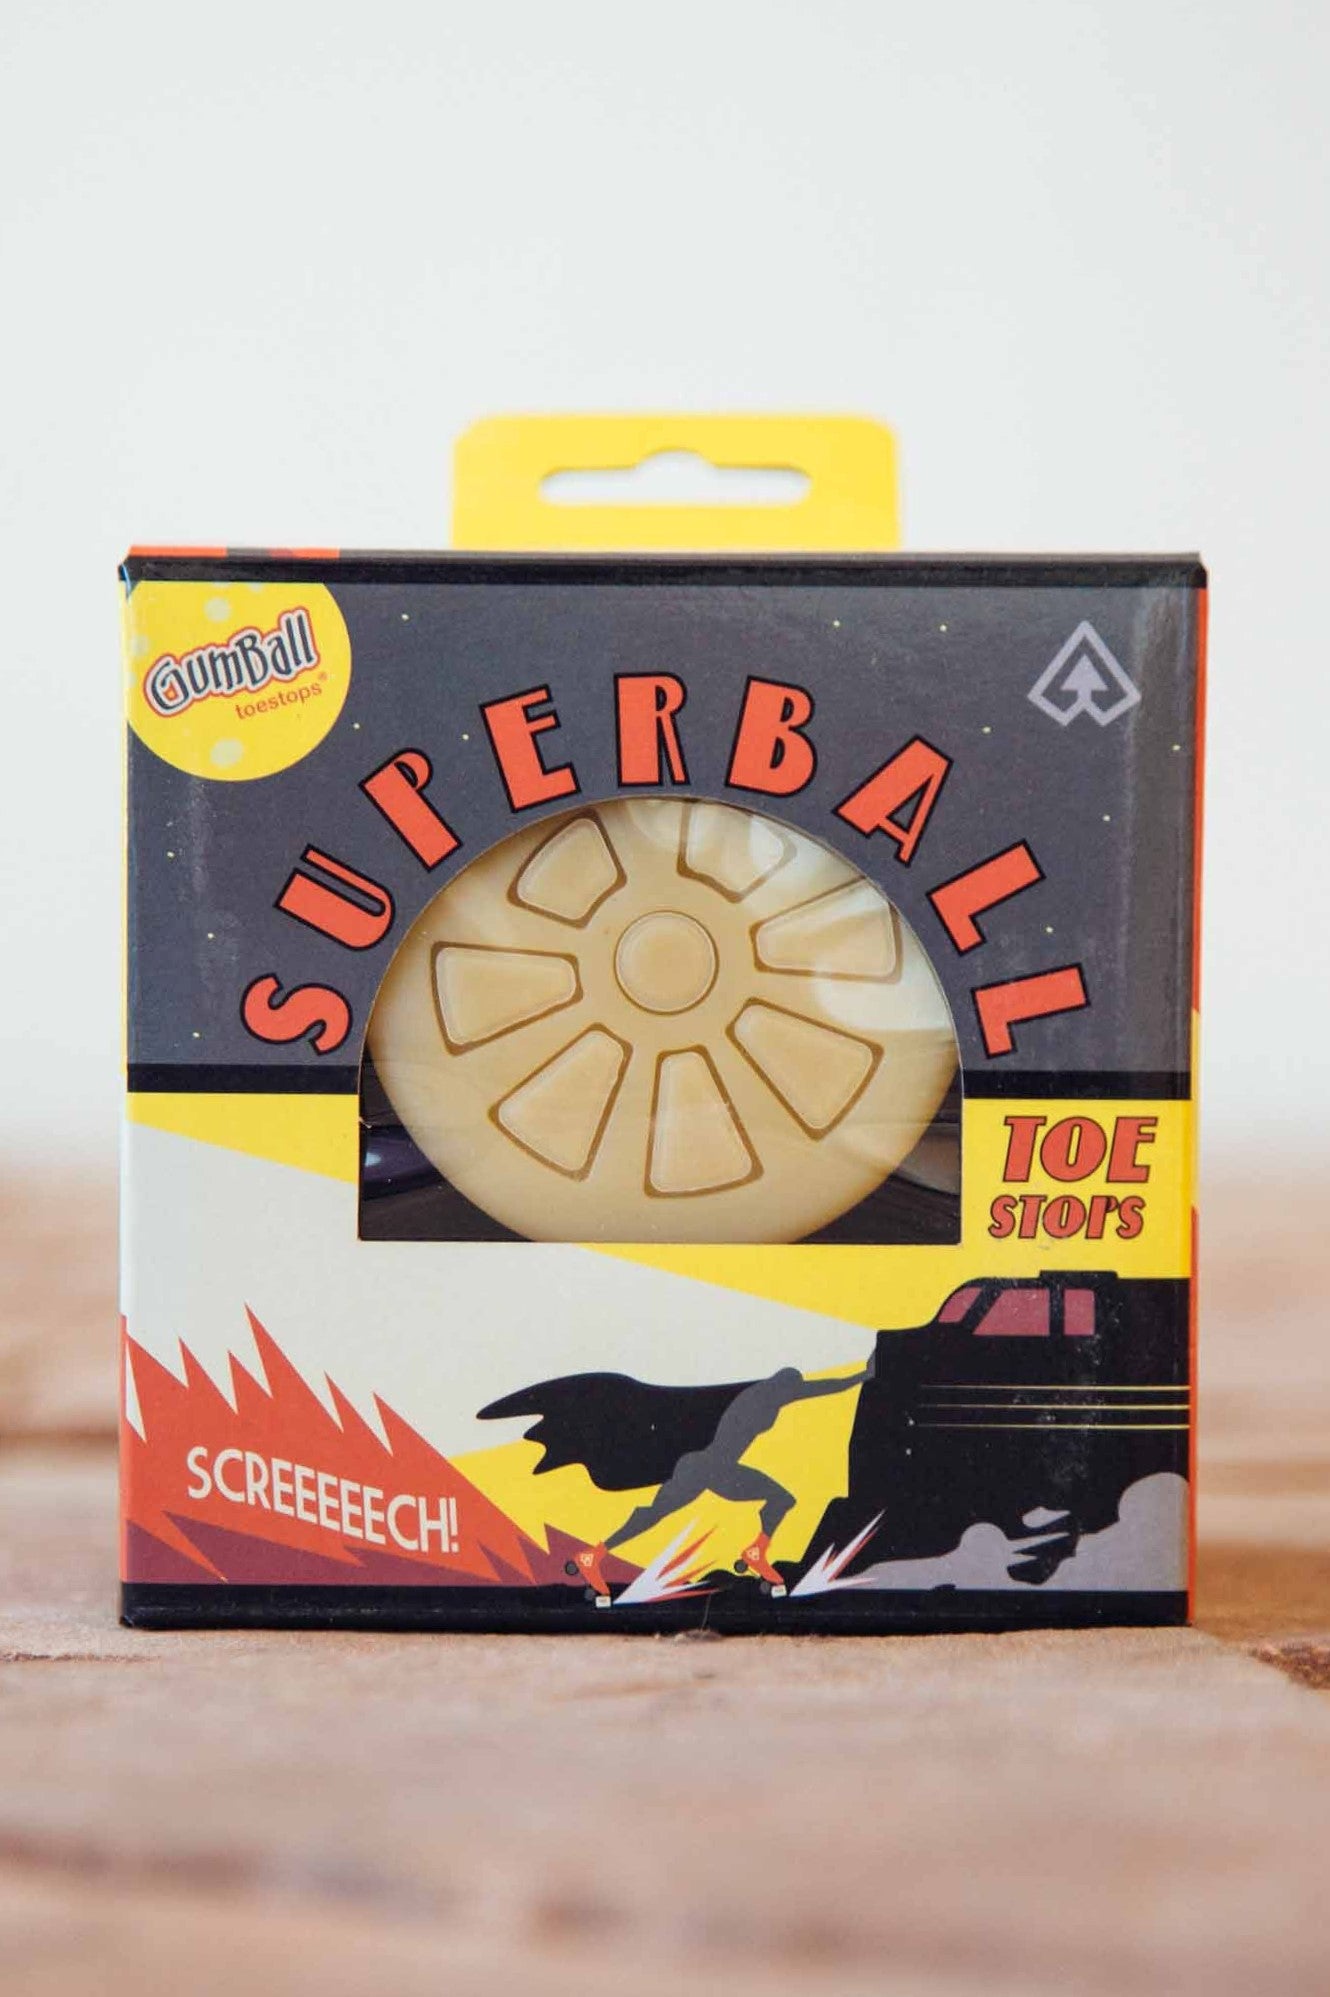 Gumball - Superball Toe Stops